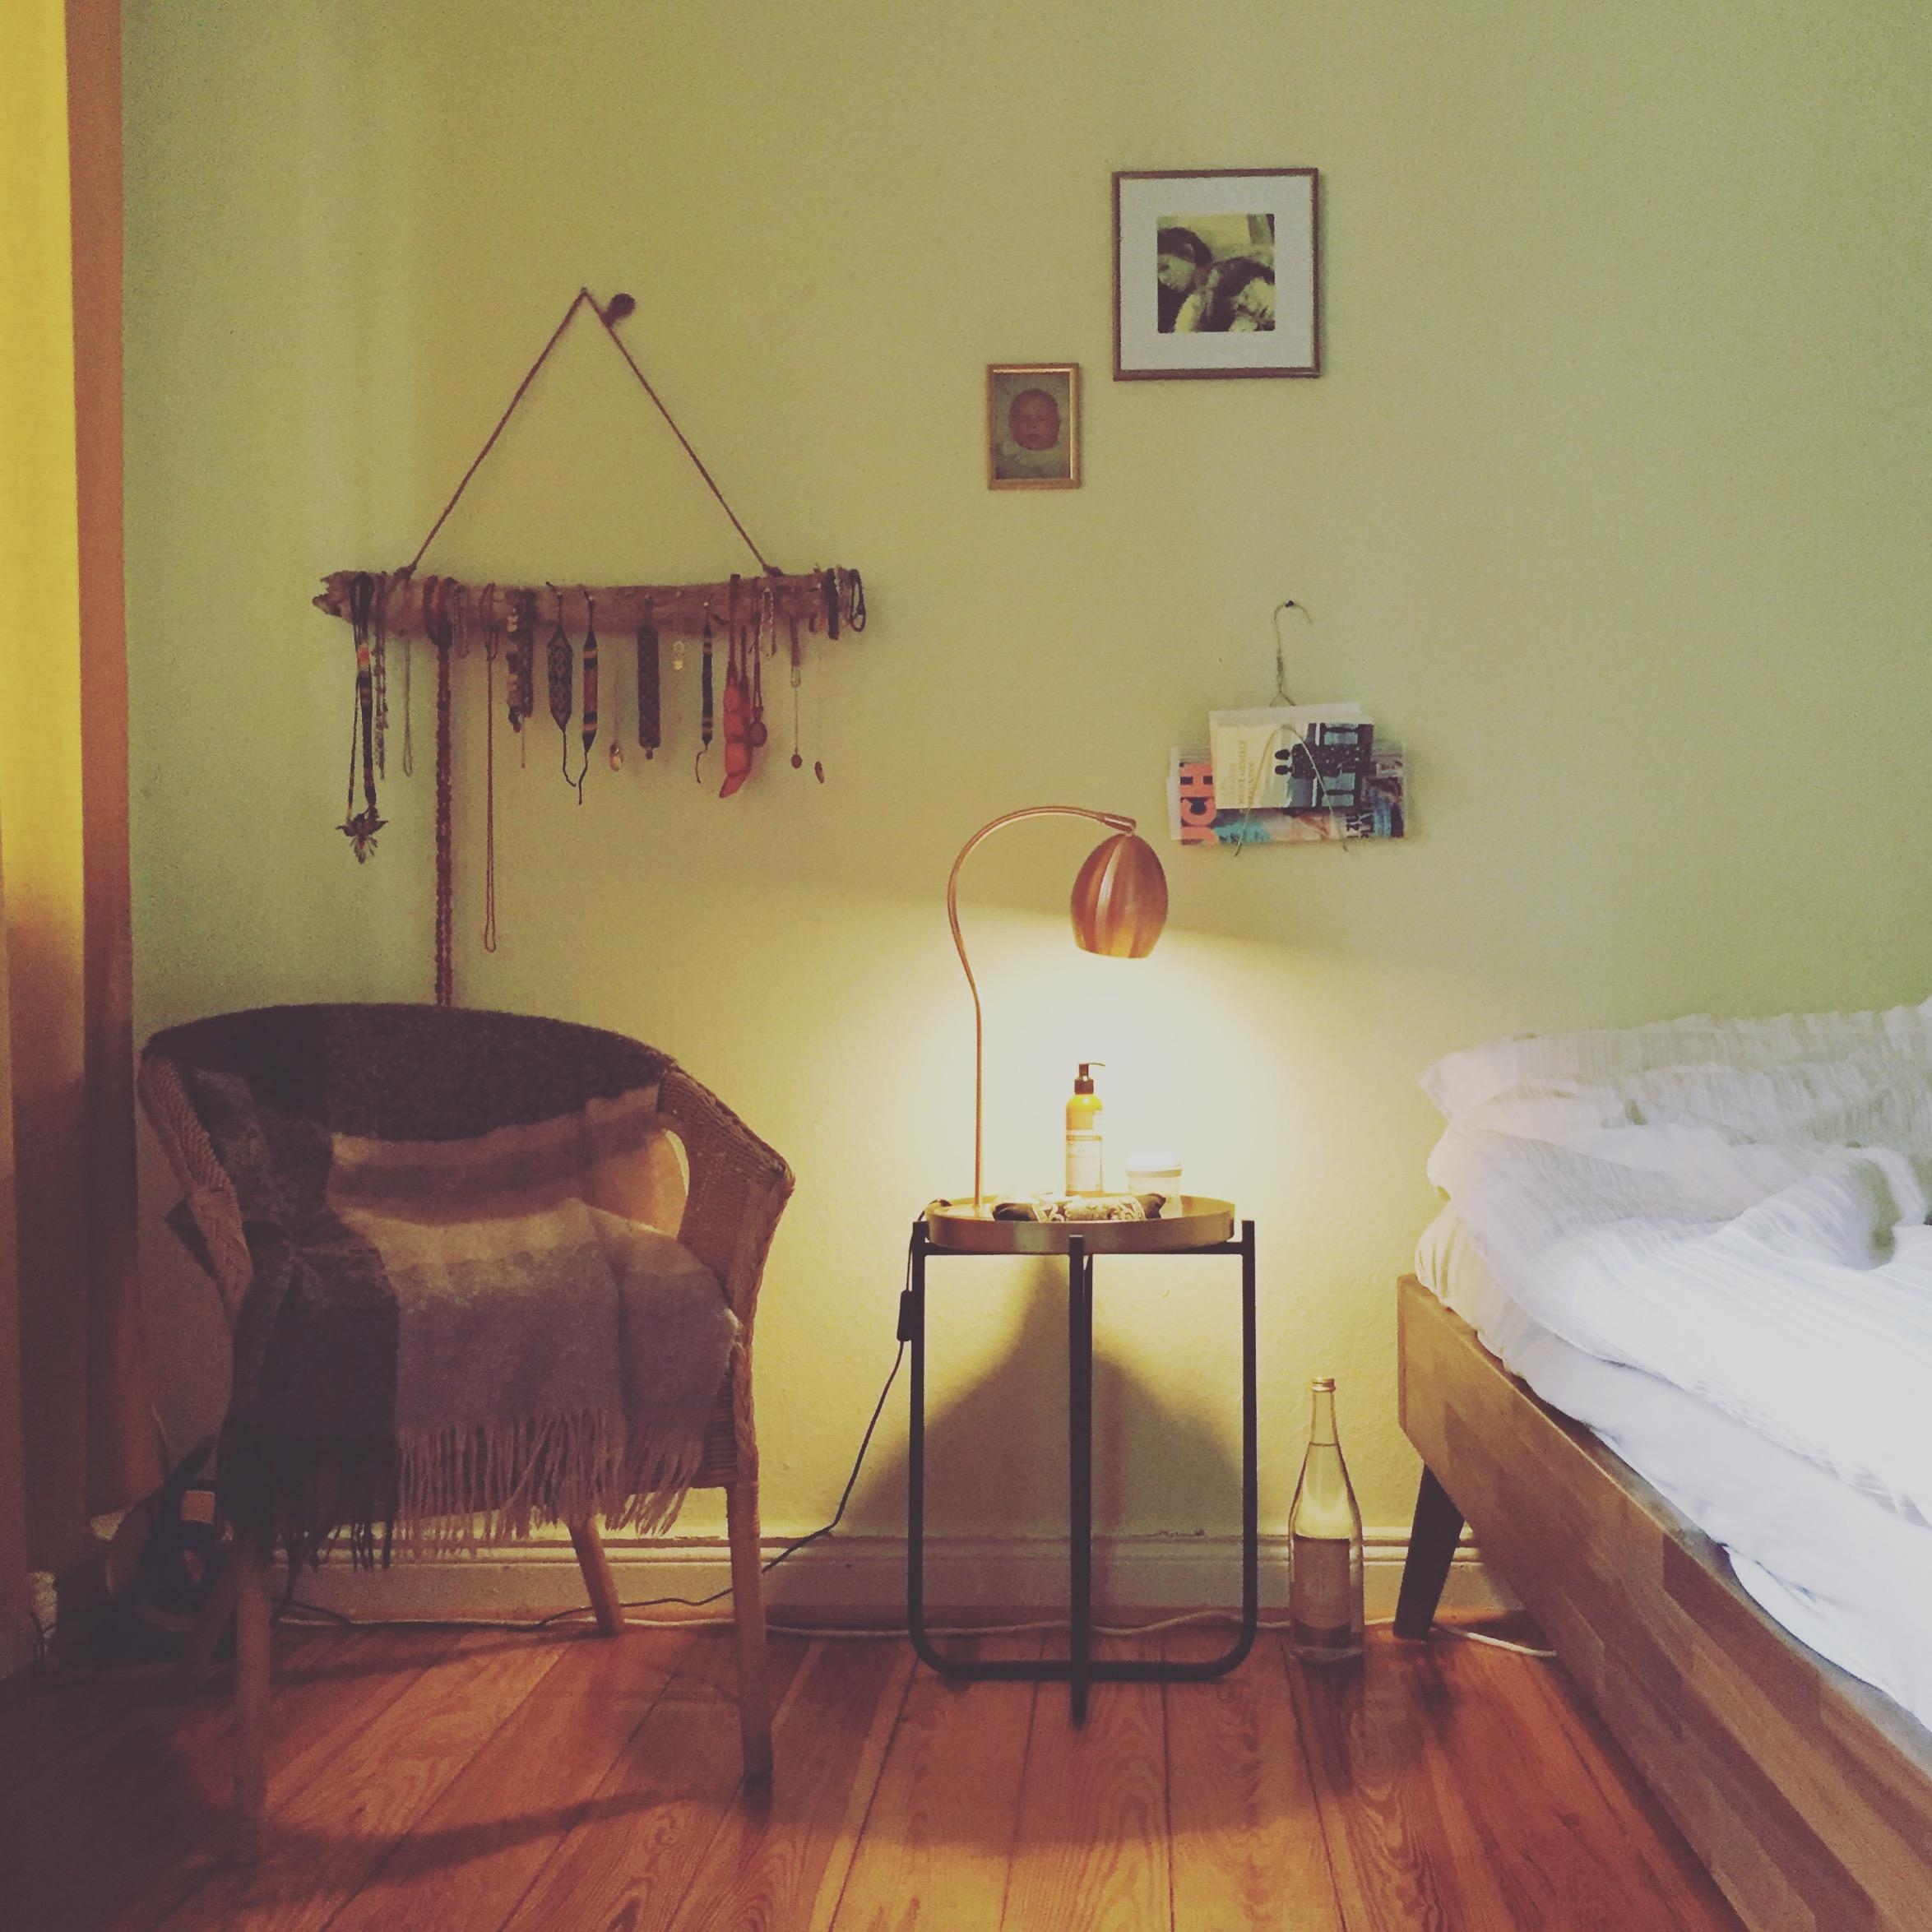 #lieblingsecke #bedroom #sundaymorning #cozybedroom #hygge